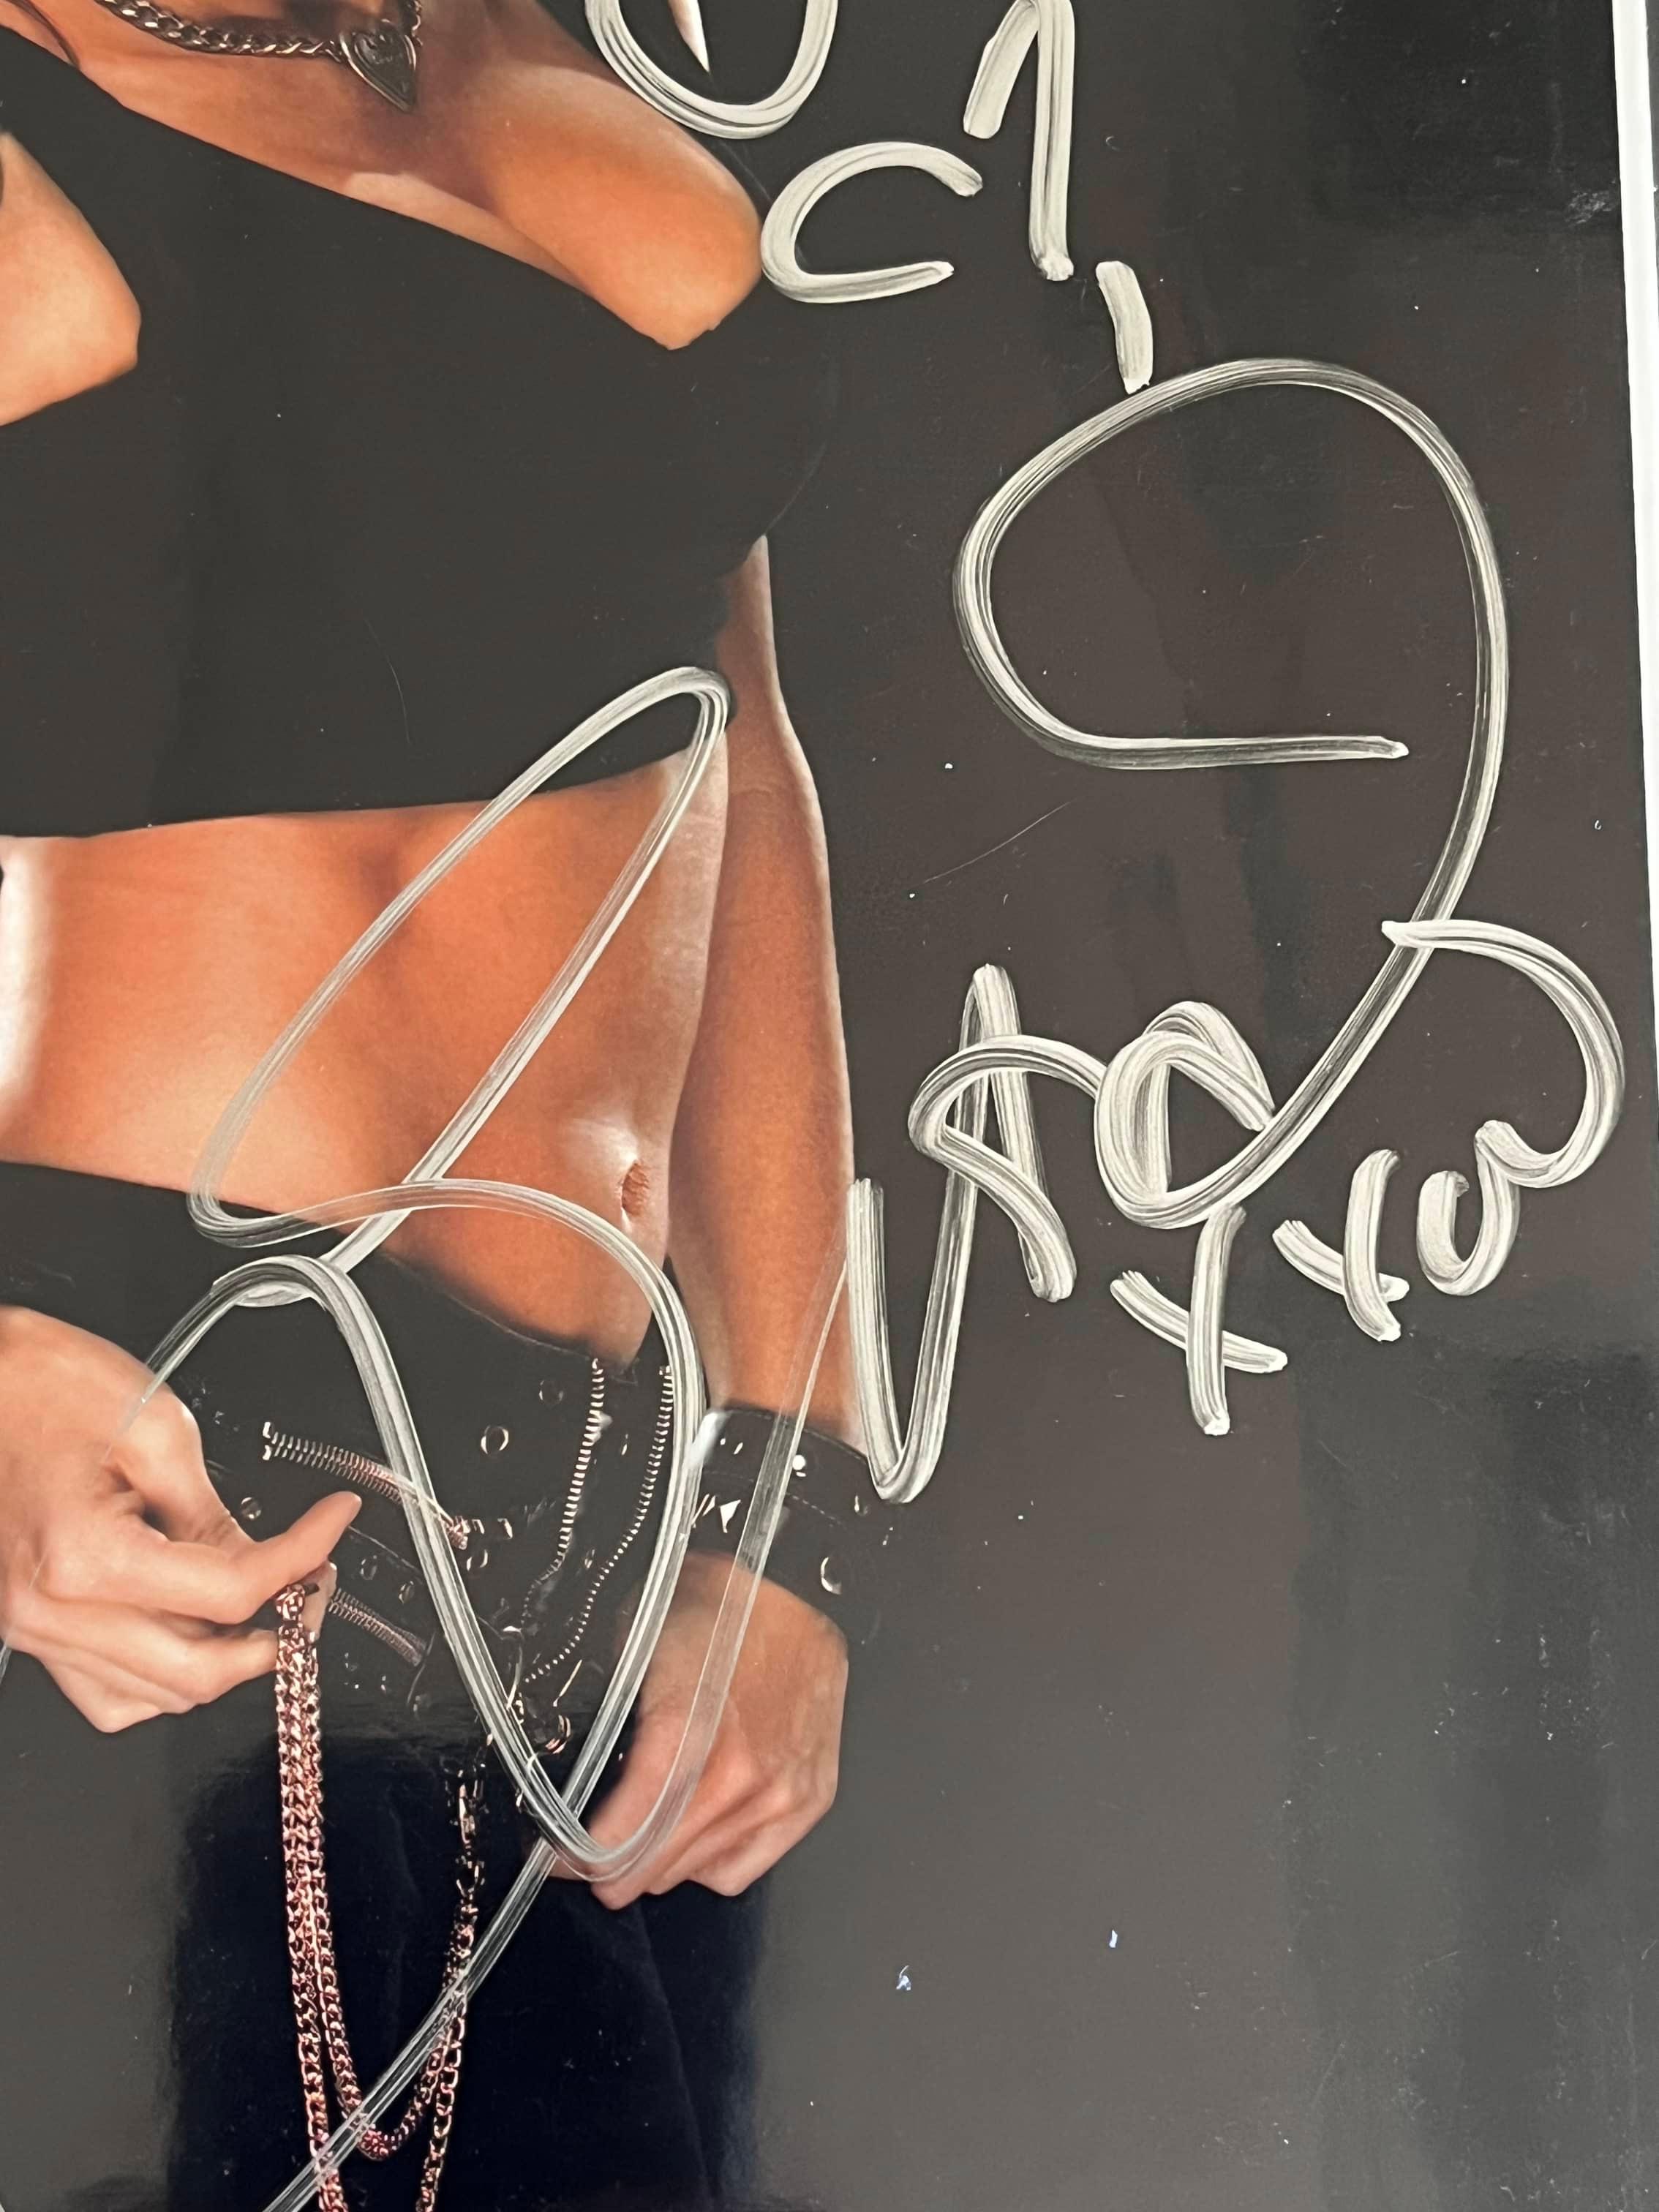 (2) Autographed Photos of WWE Wrestler "Lita"